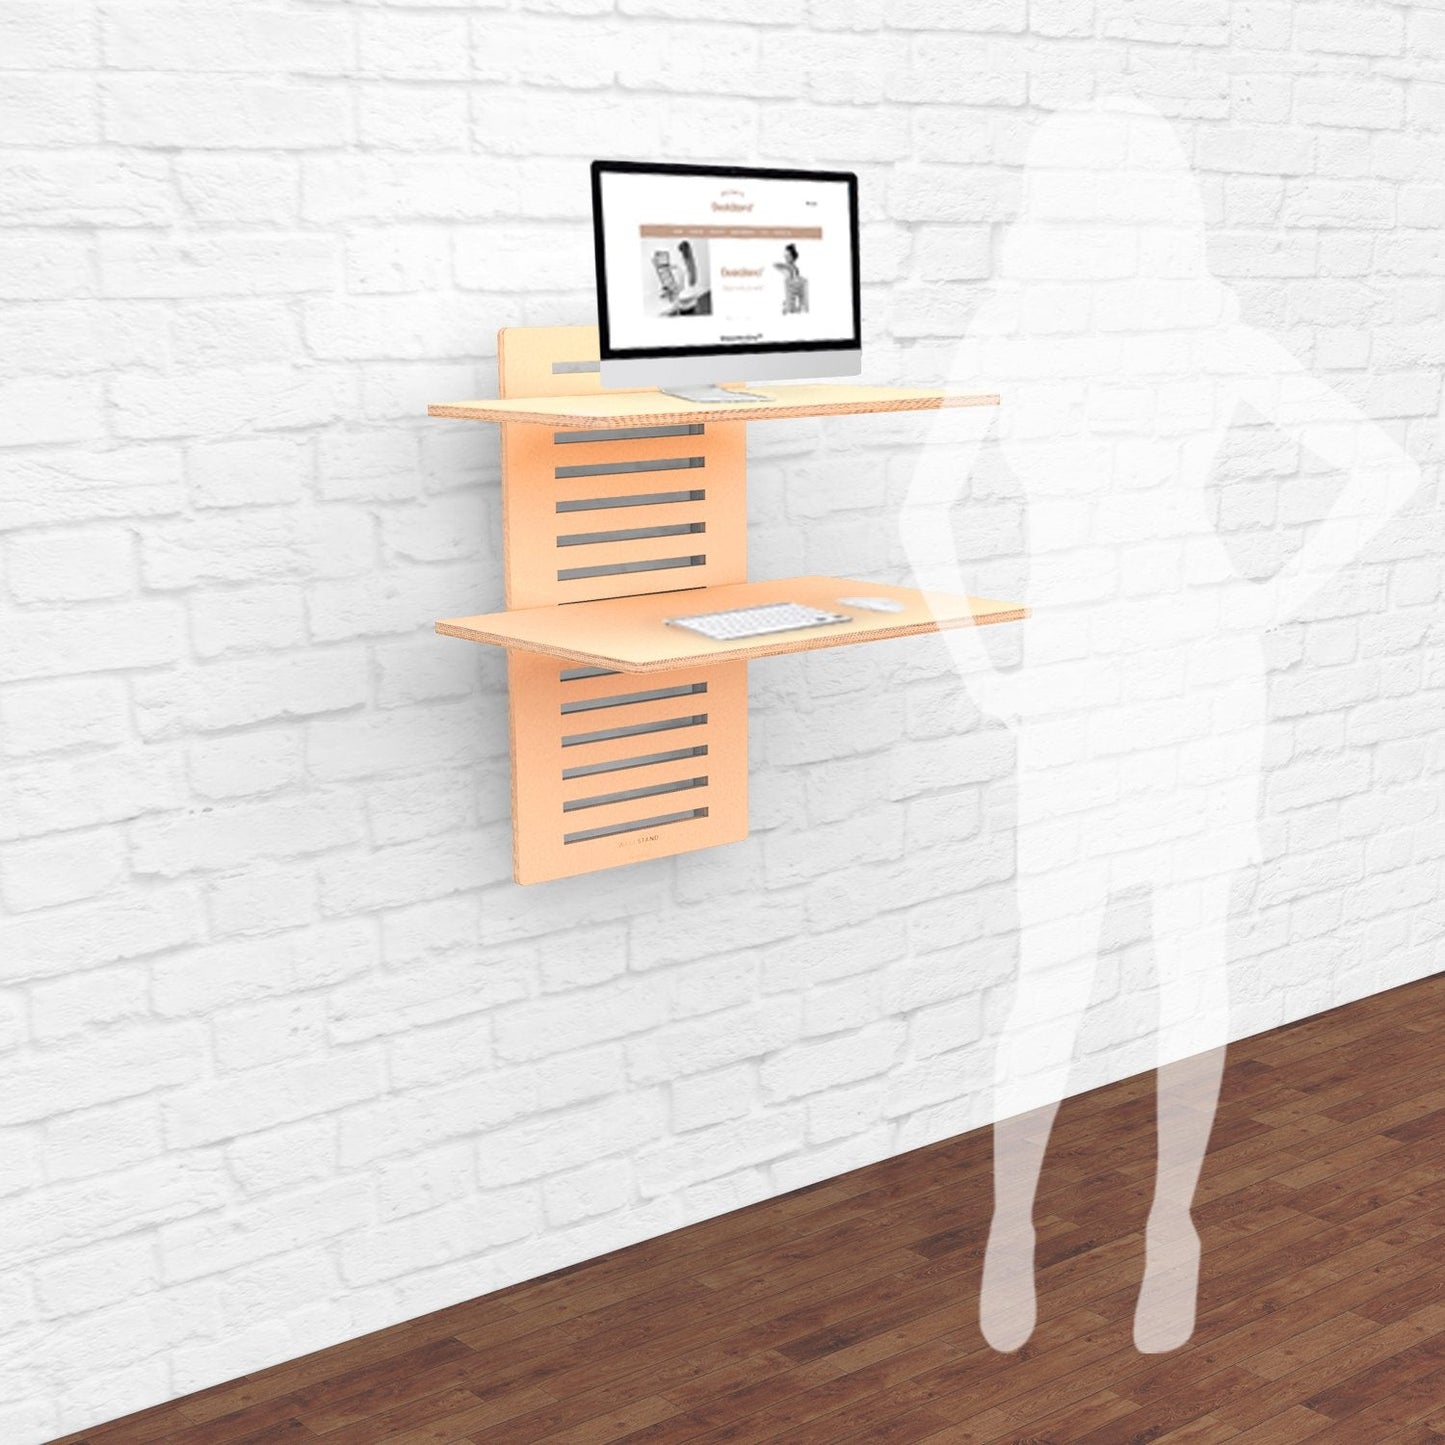 ElevaDesk Adjustable Wall-mounted Standing Desk